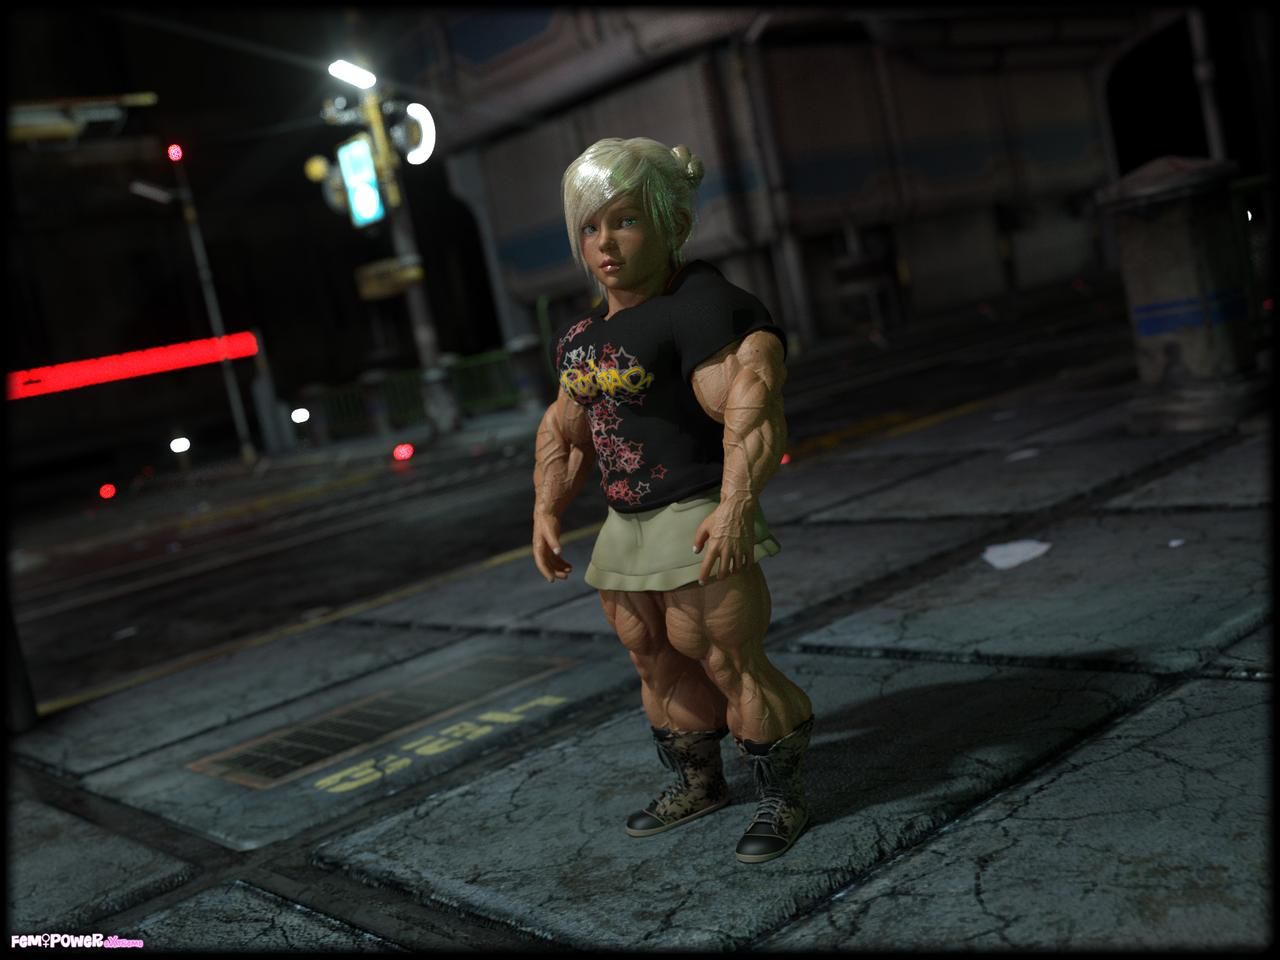 Muscle girls 3D models_ part 2 by Tigersan 151